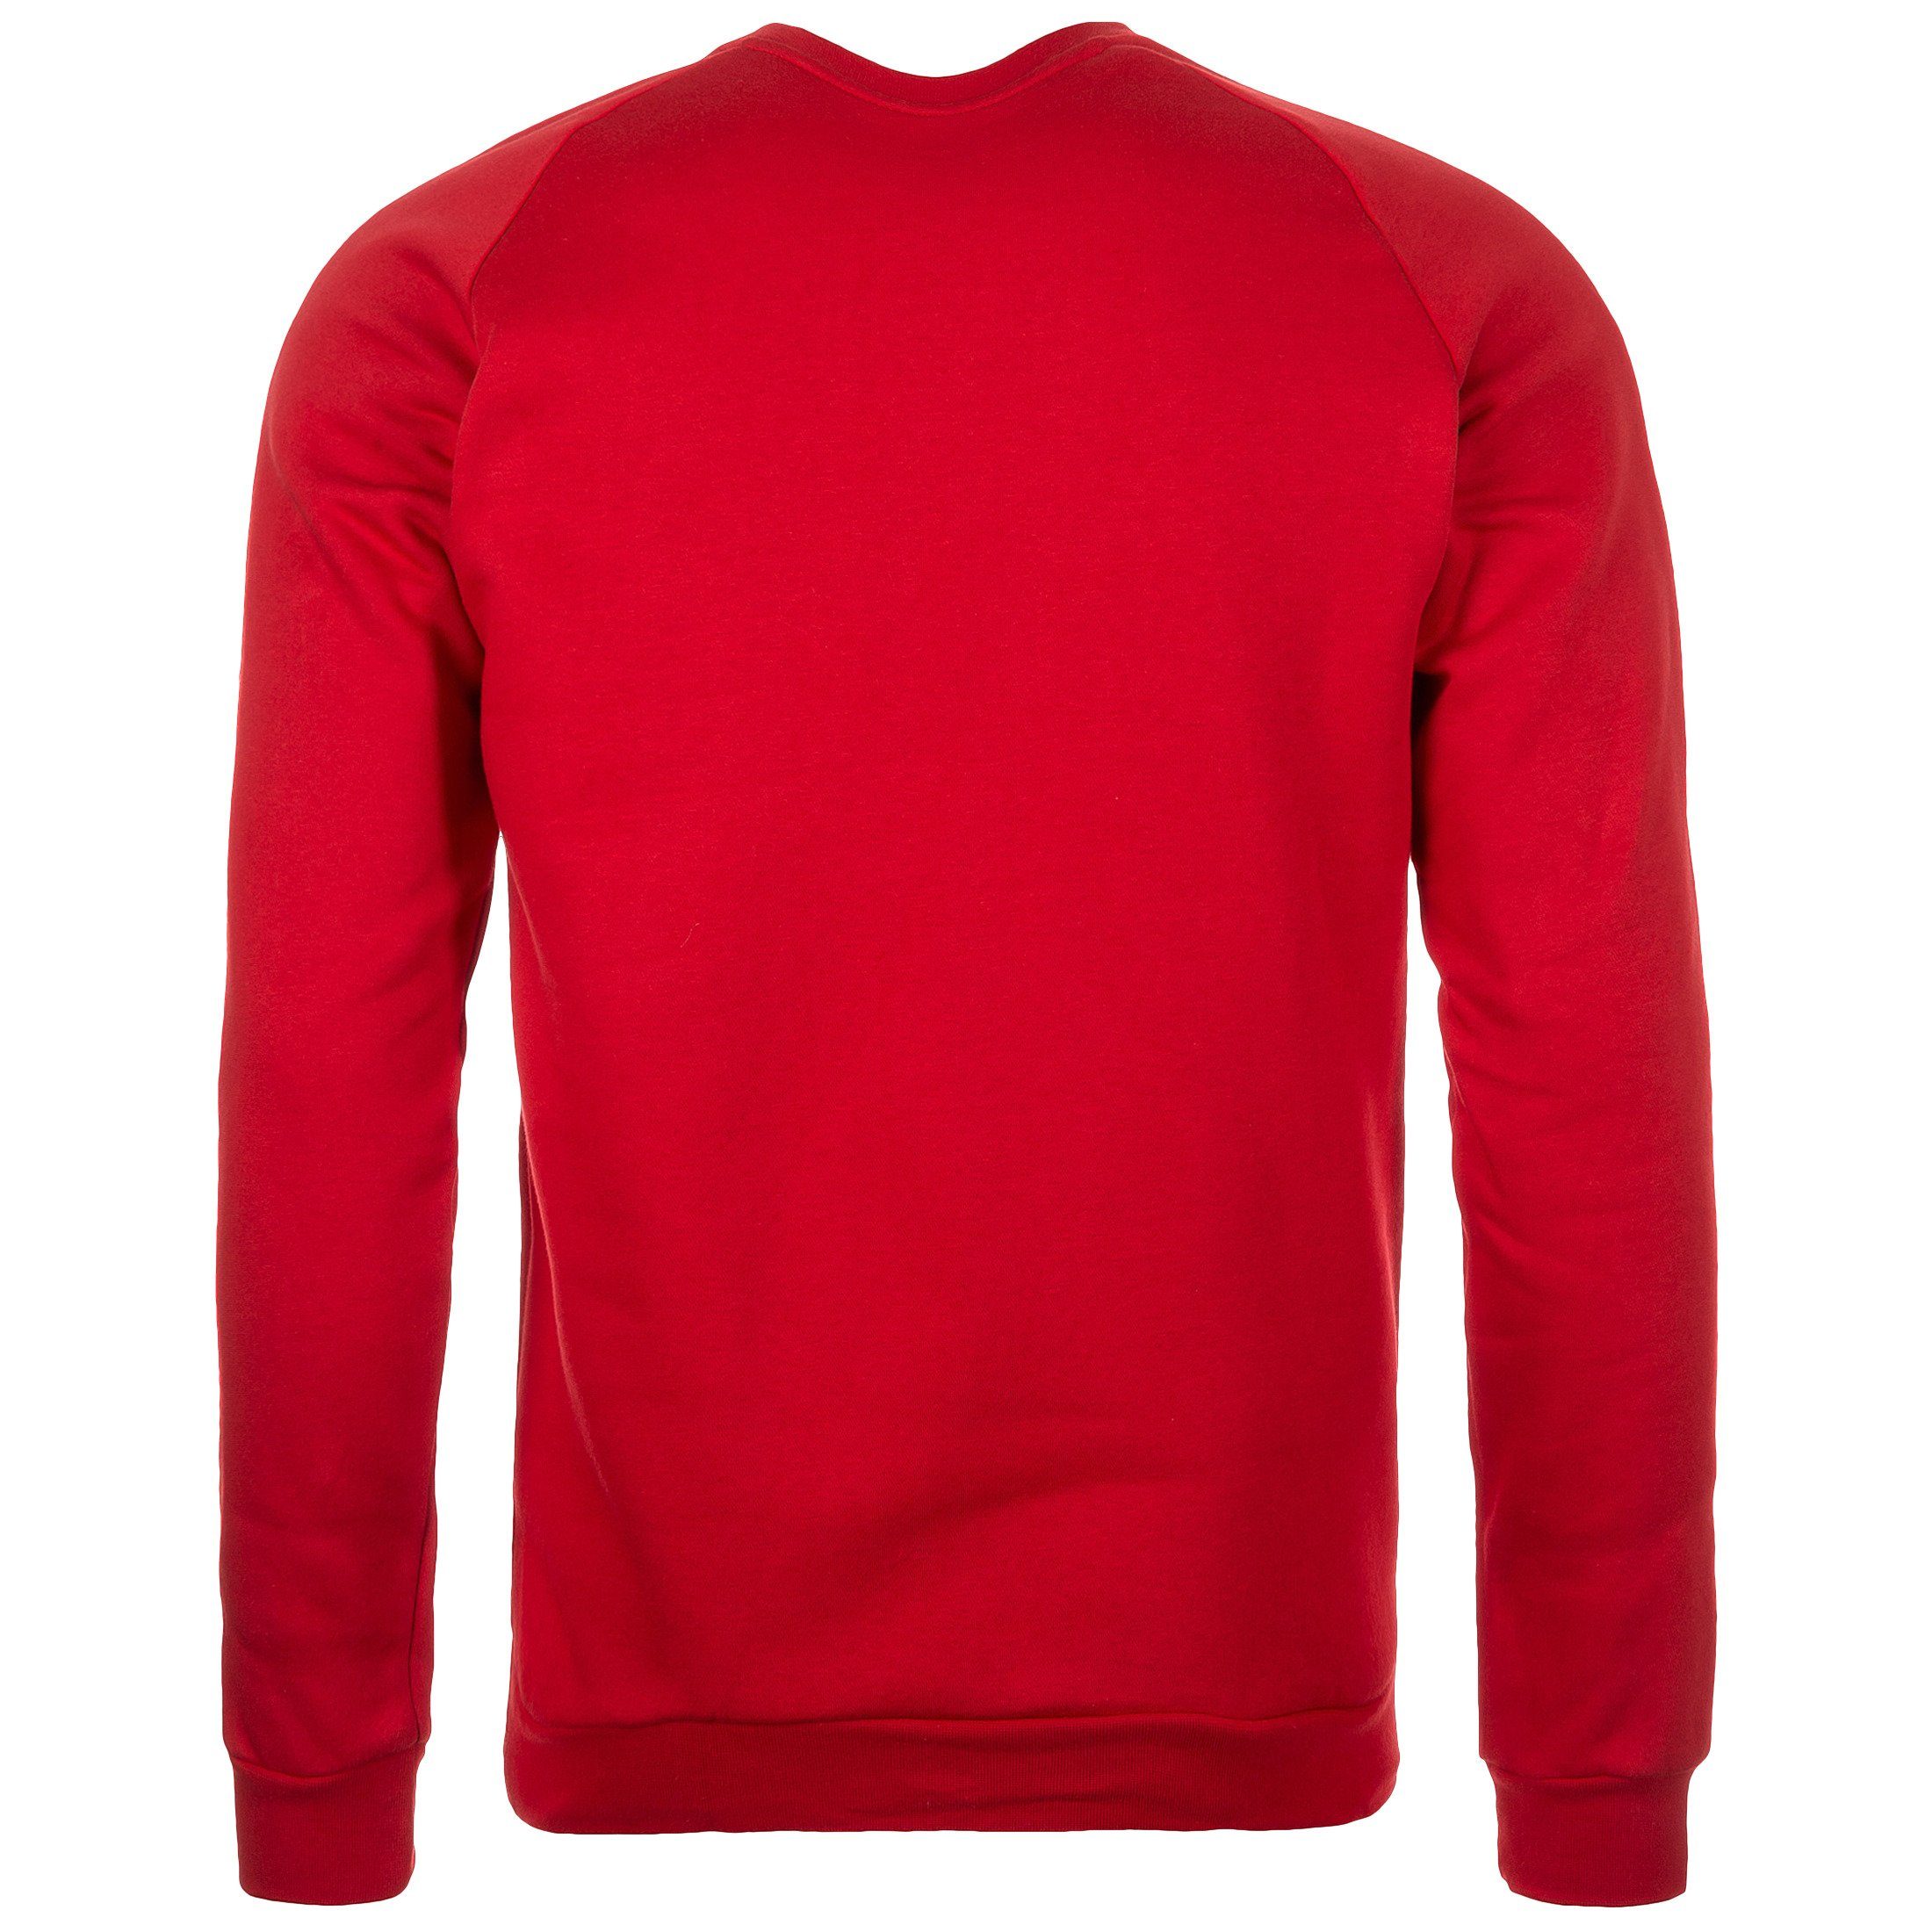 Herren Core 18 adidas / rot Sweatshirt Sweatshirt weiß Performance